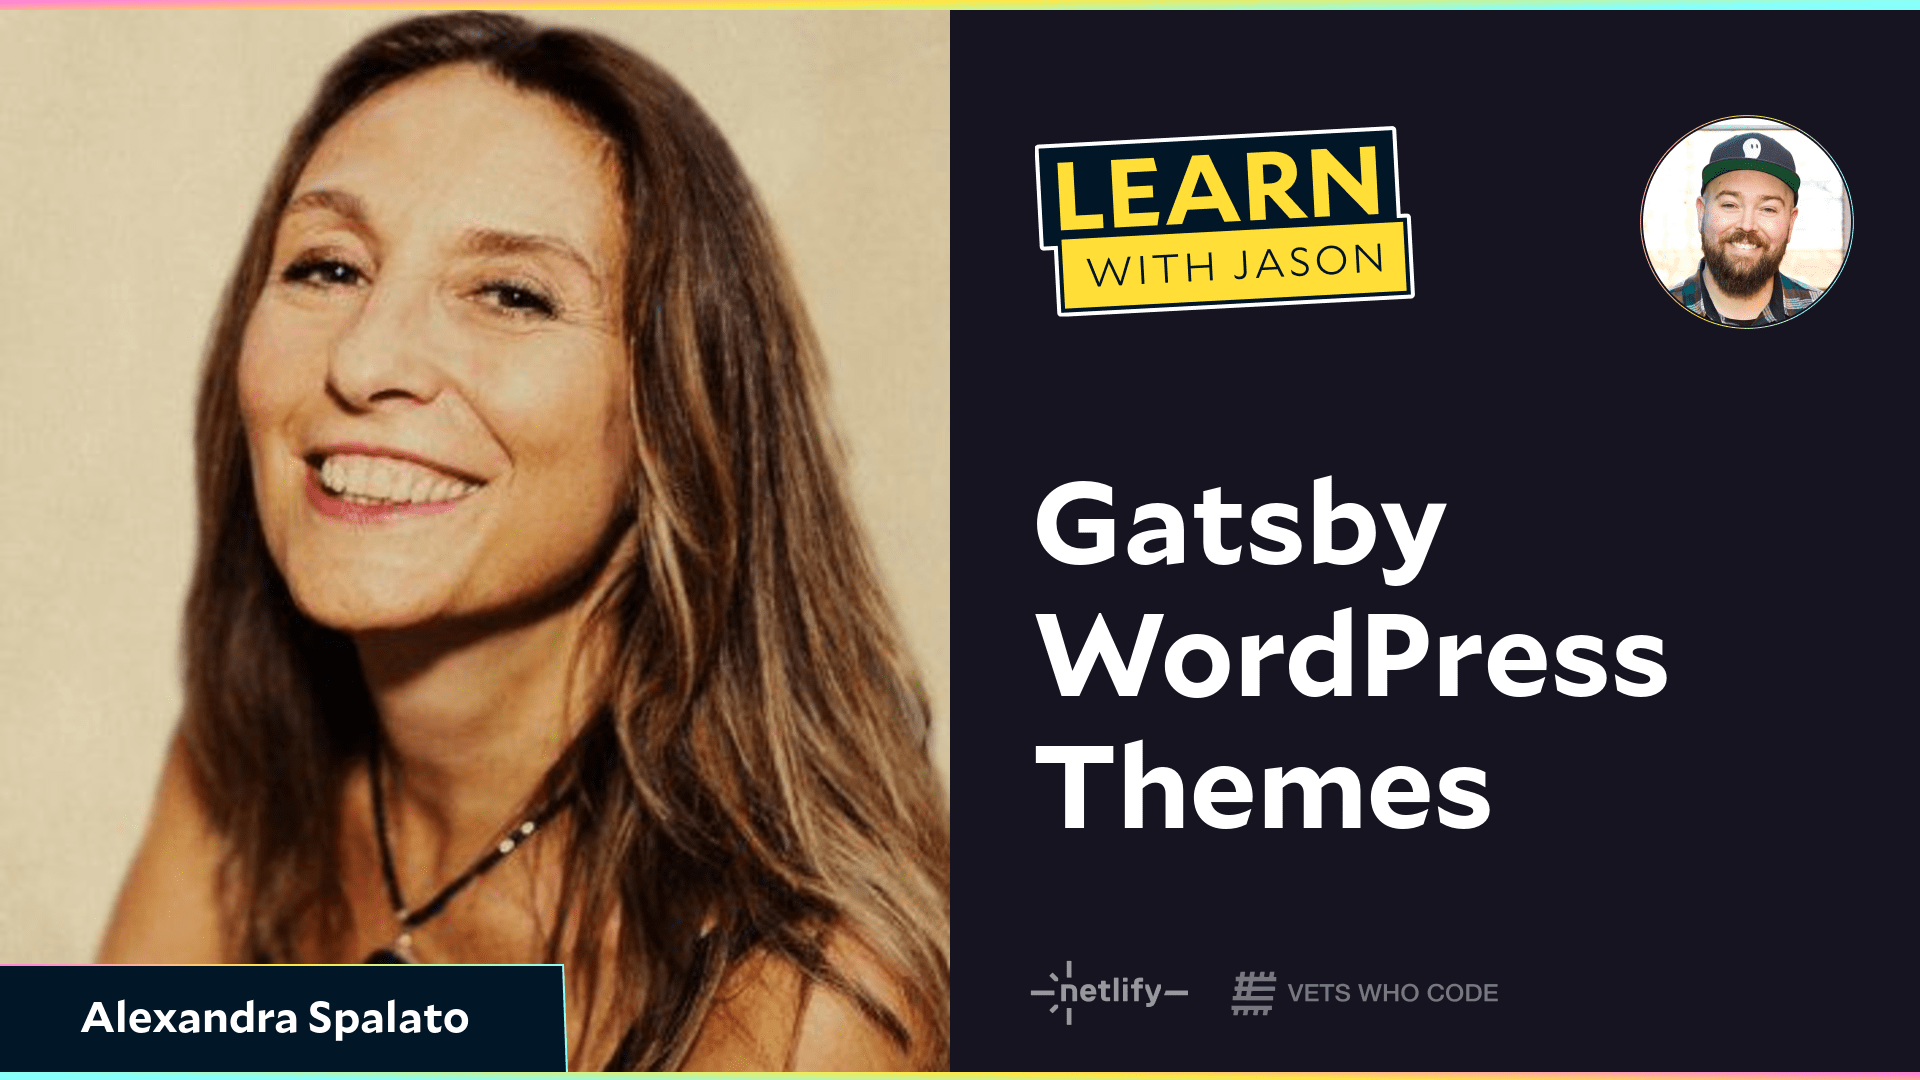 Gatsby WordPress Themes (with Alexandra Spalato)